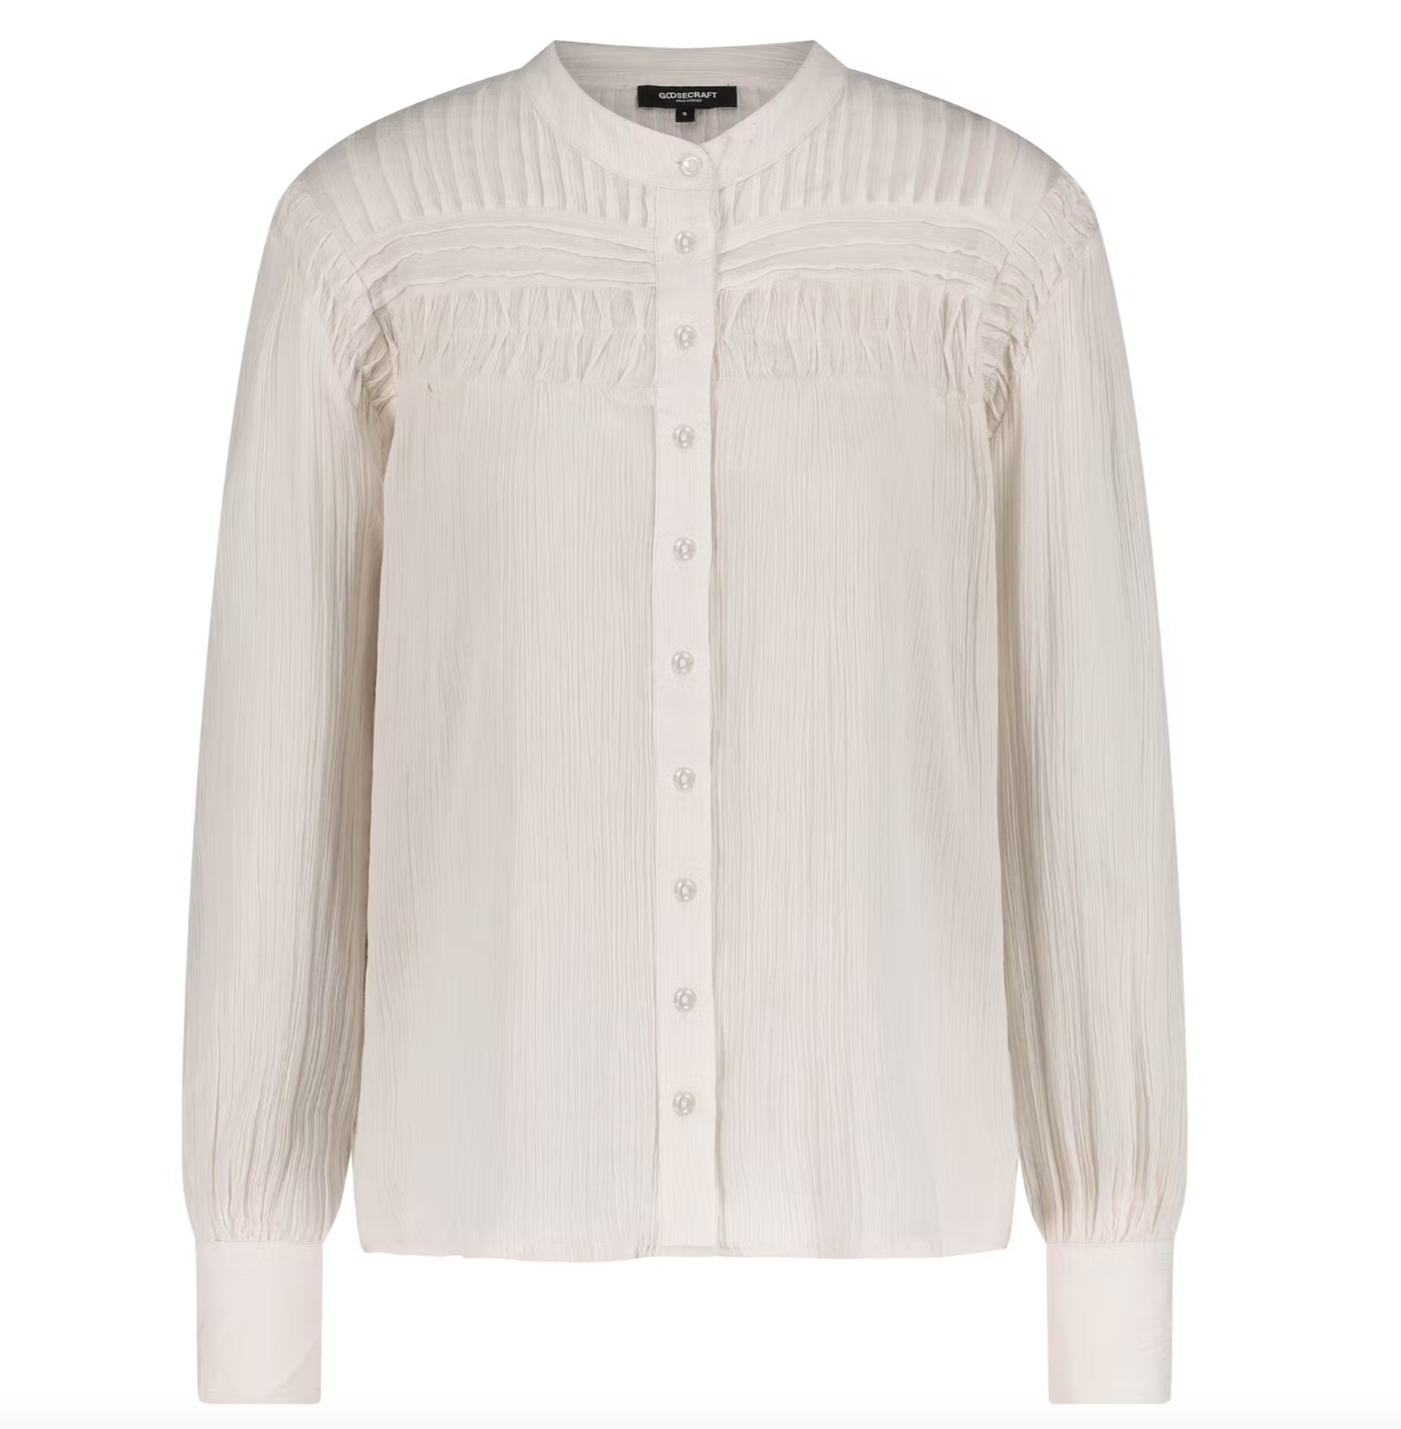 Pippa blouse - antique white